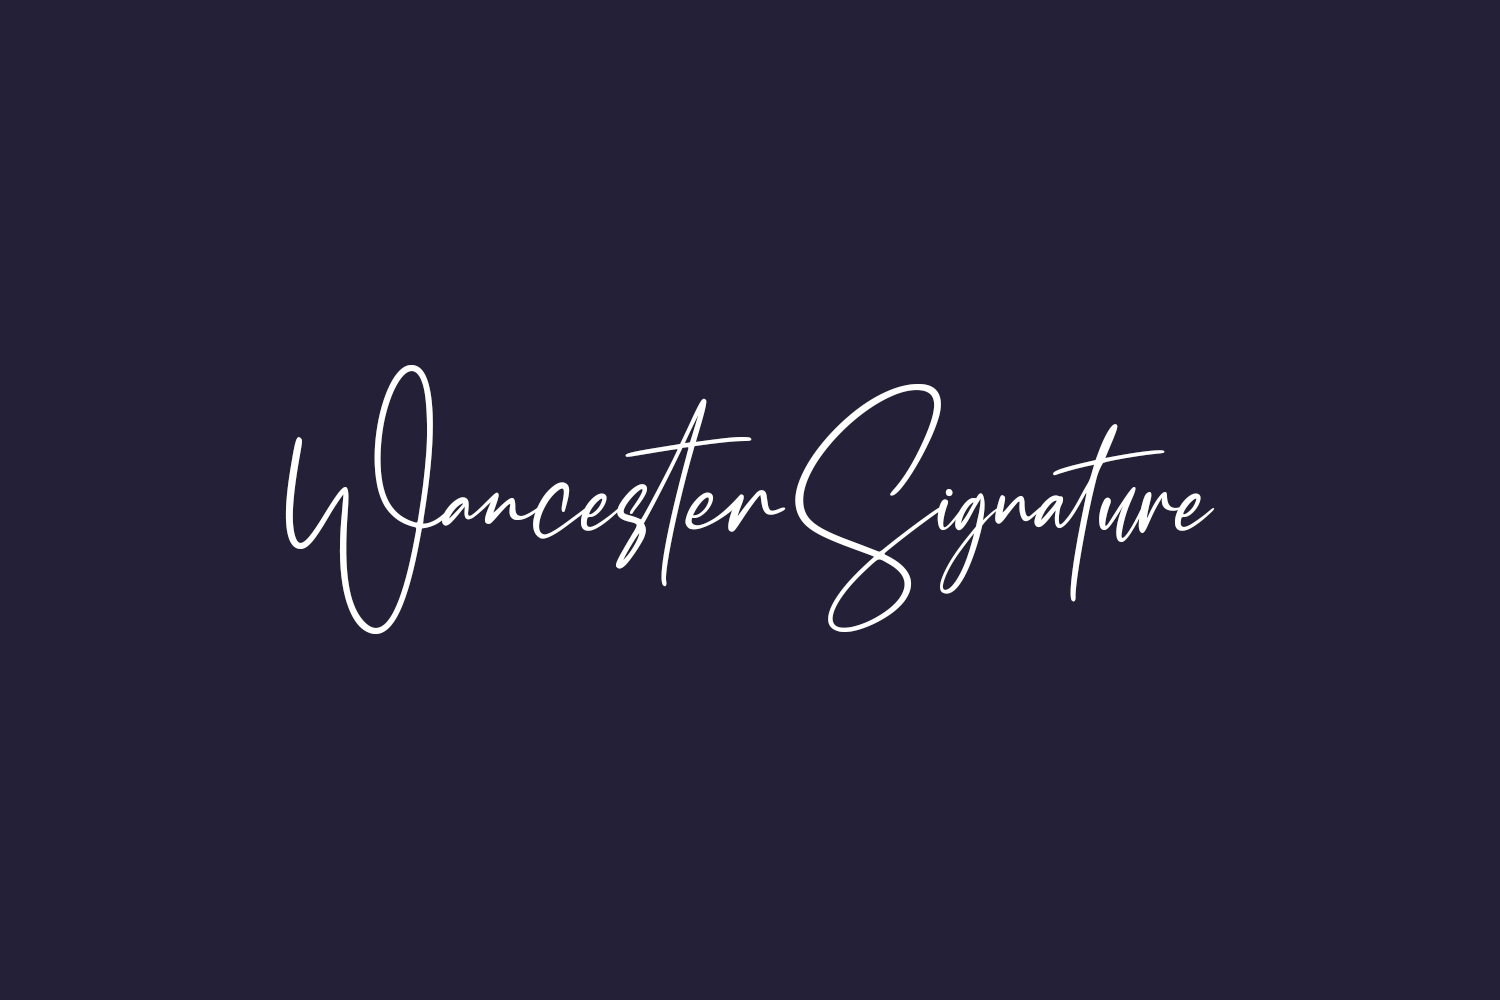 Wancester Signature Free Font